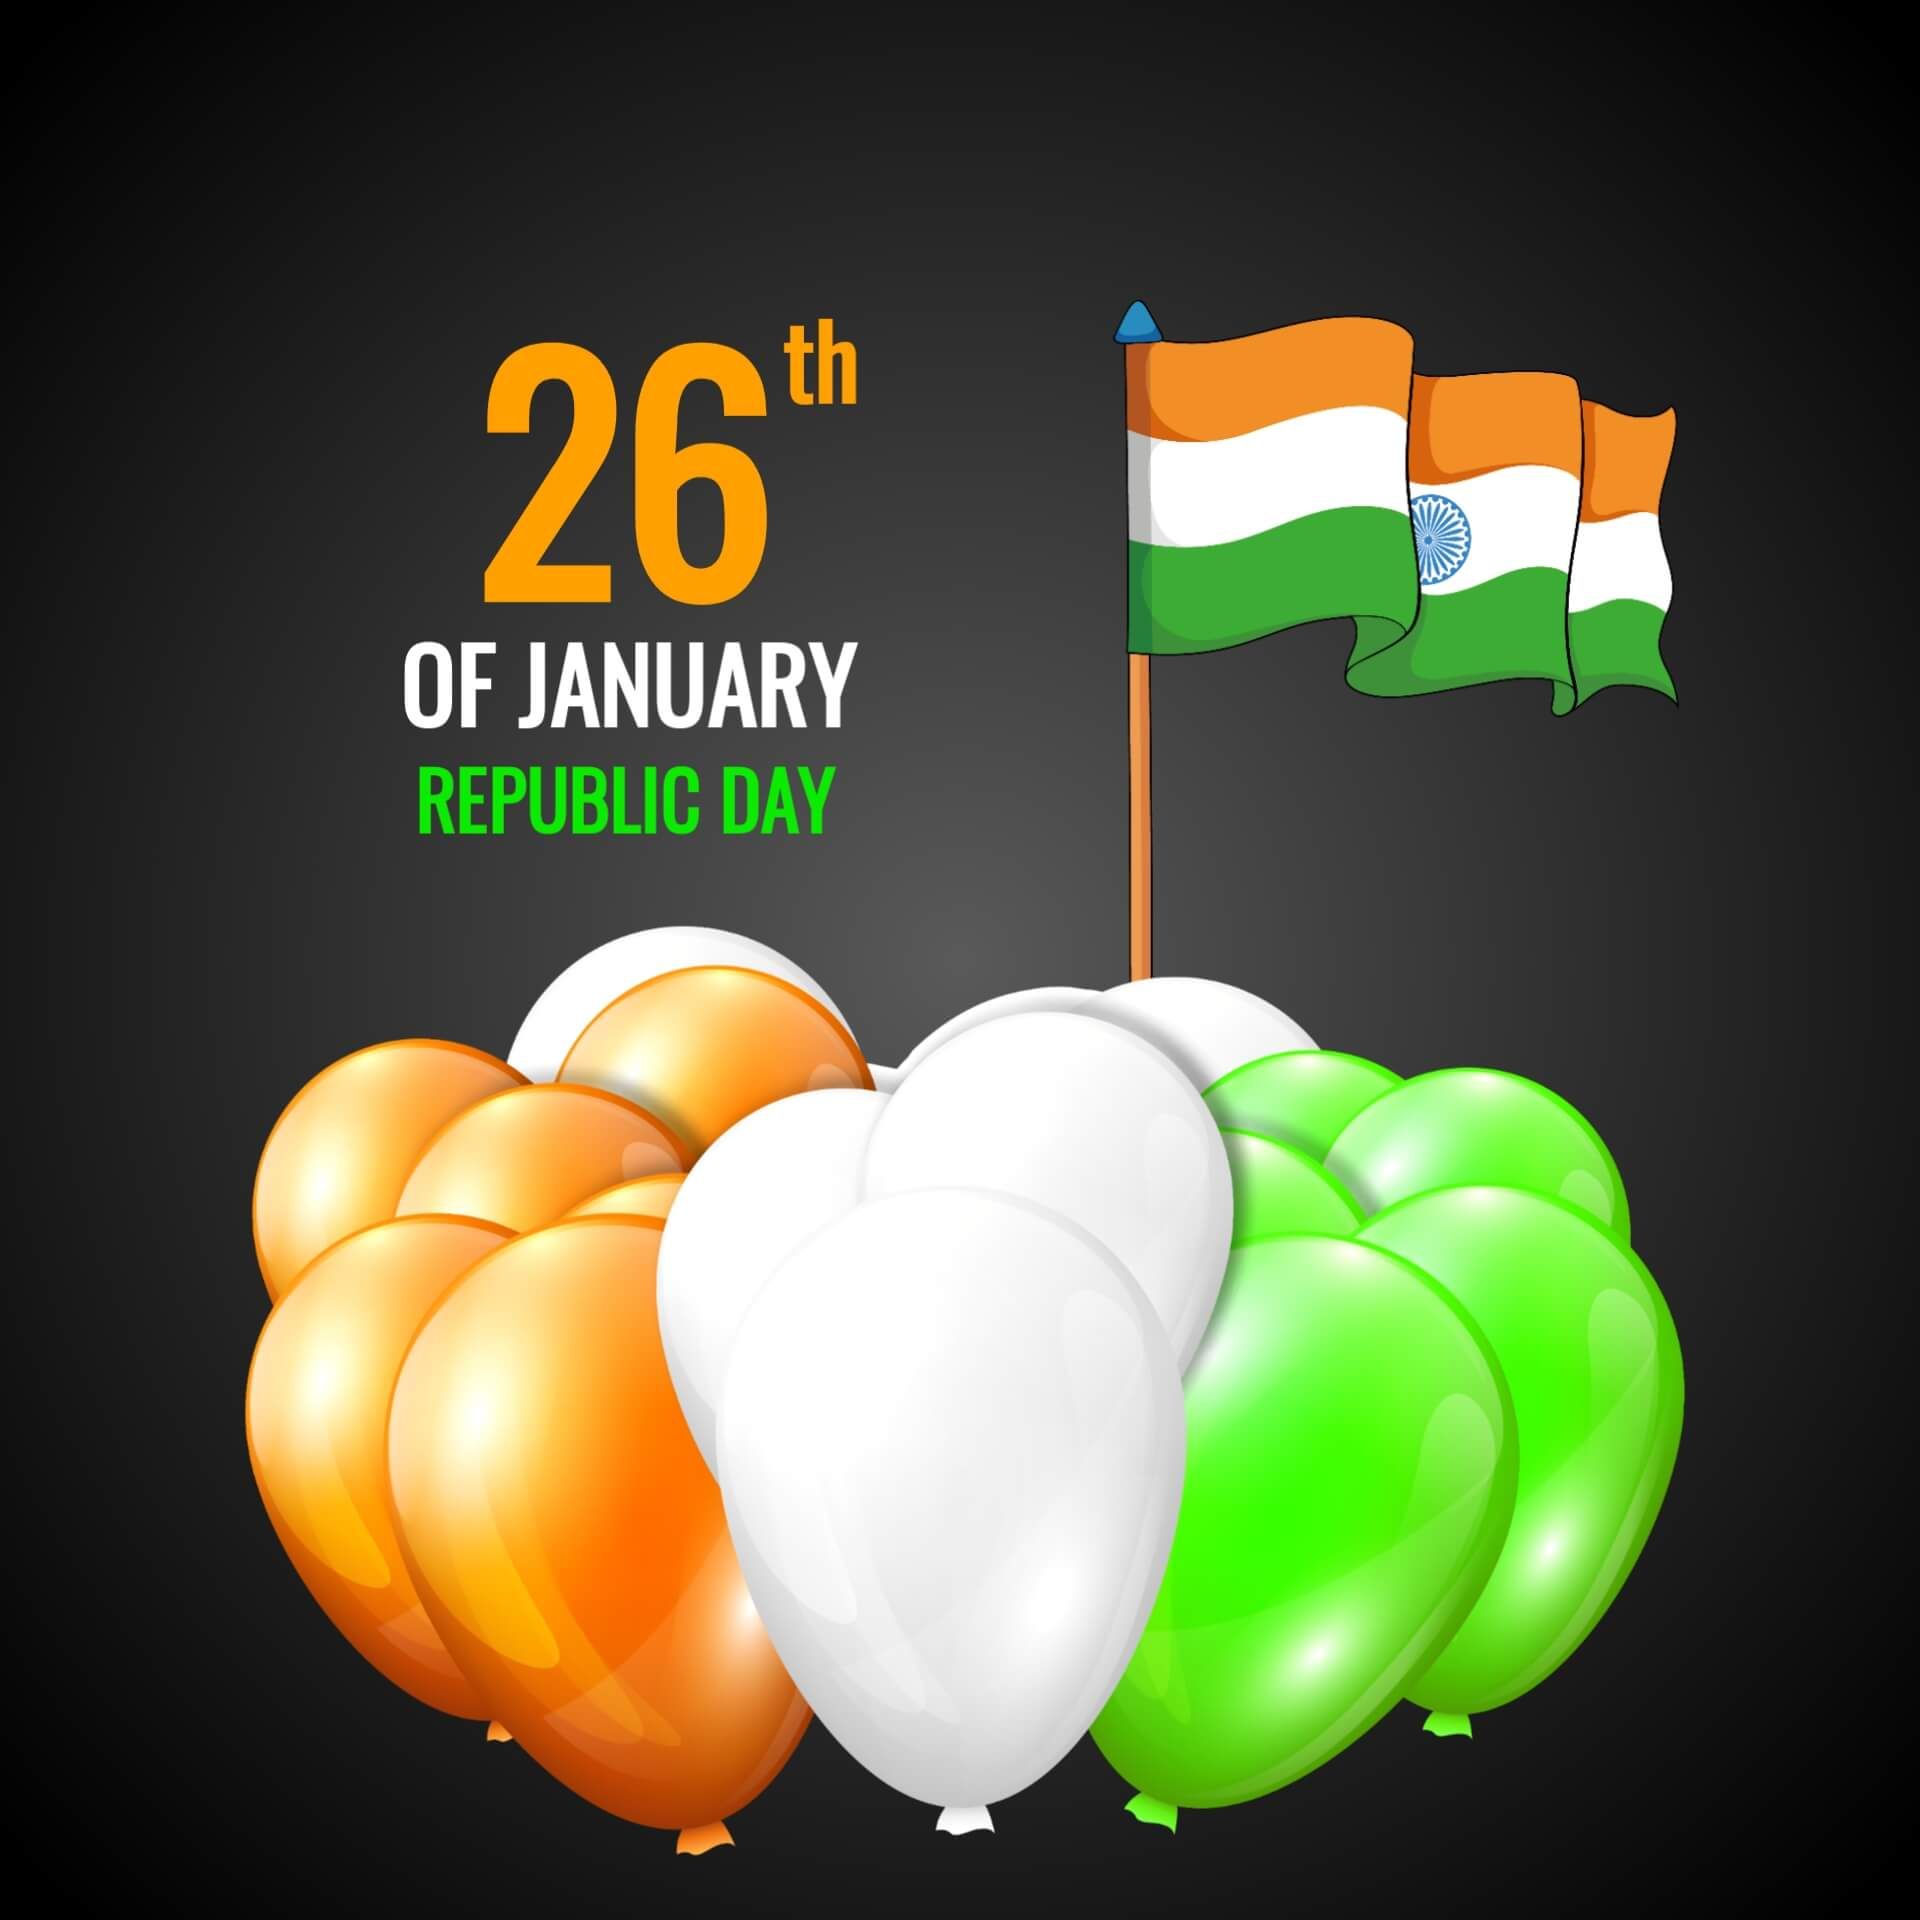 Happy Republic Day Image. Republic day, India republic day image, Republic day status